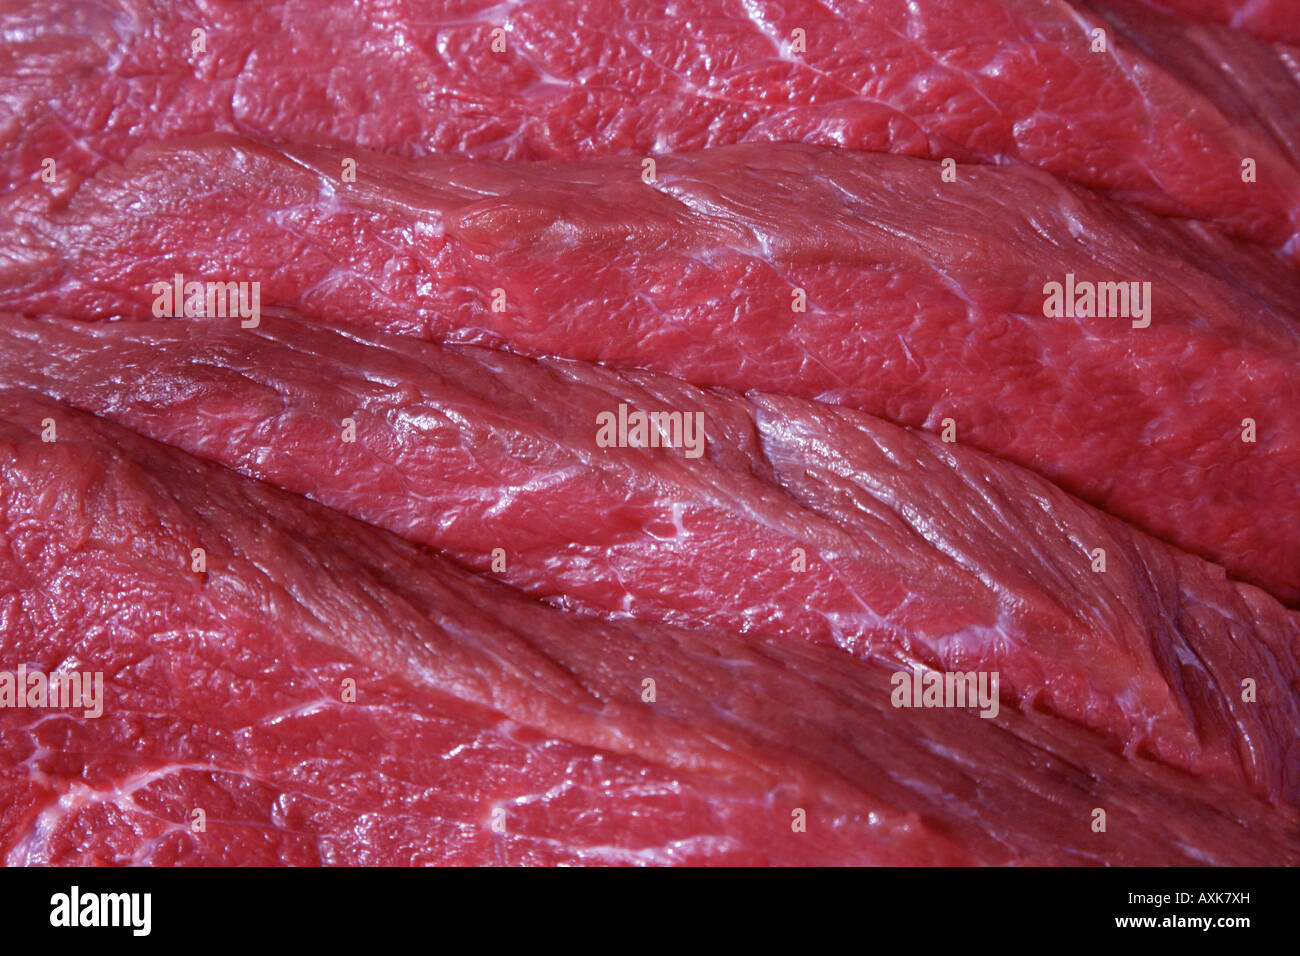 Taglio fresco rosso carne cruda close up Foto Stock